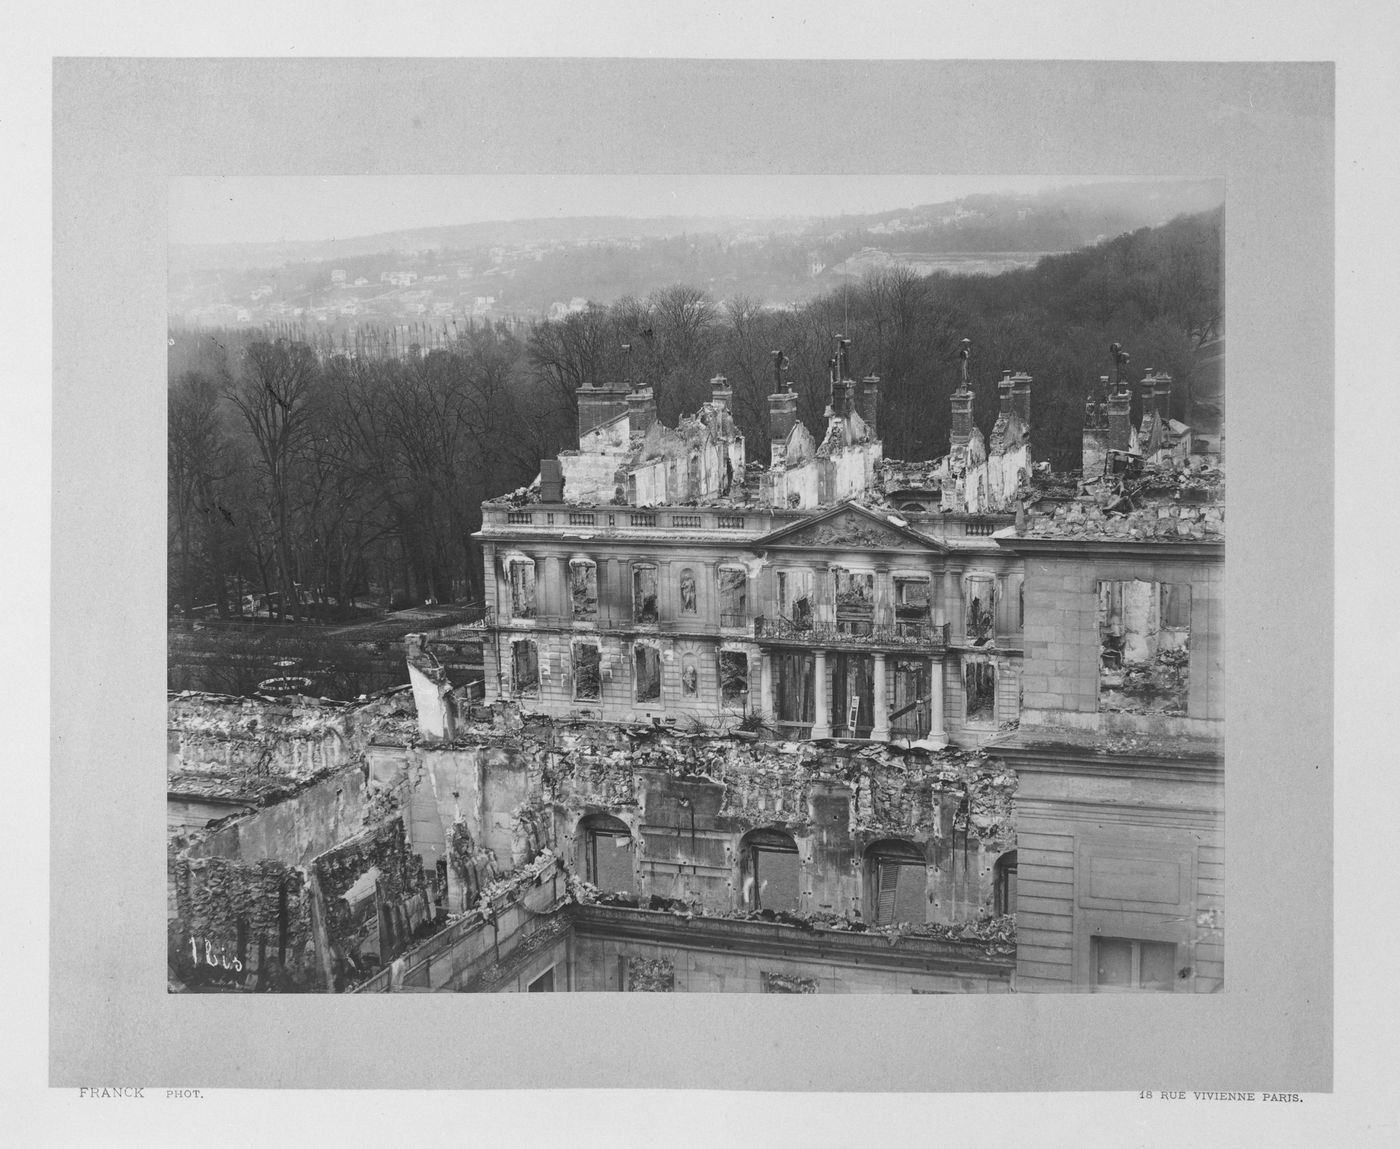 View looking down into a portion of the ruins of the Château de Saint-Cloud, Saint-Cloud, France